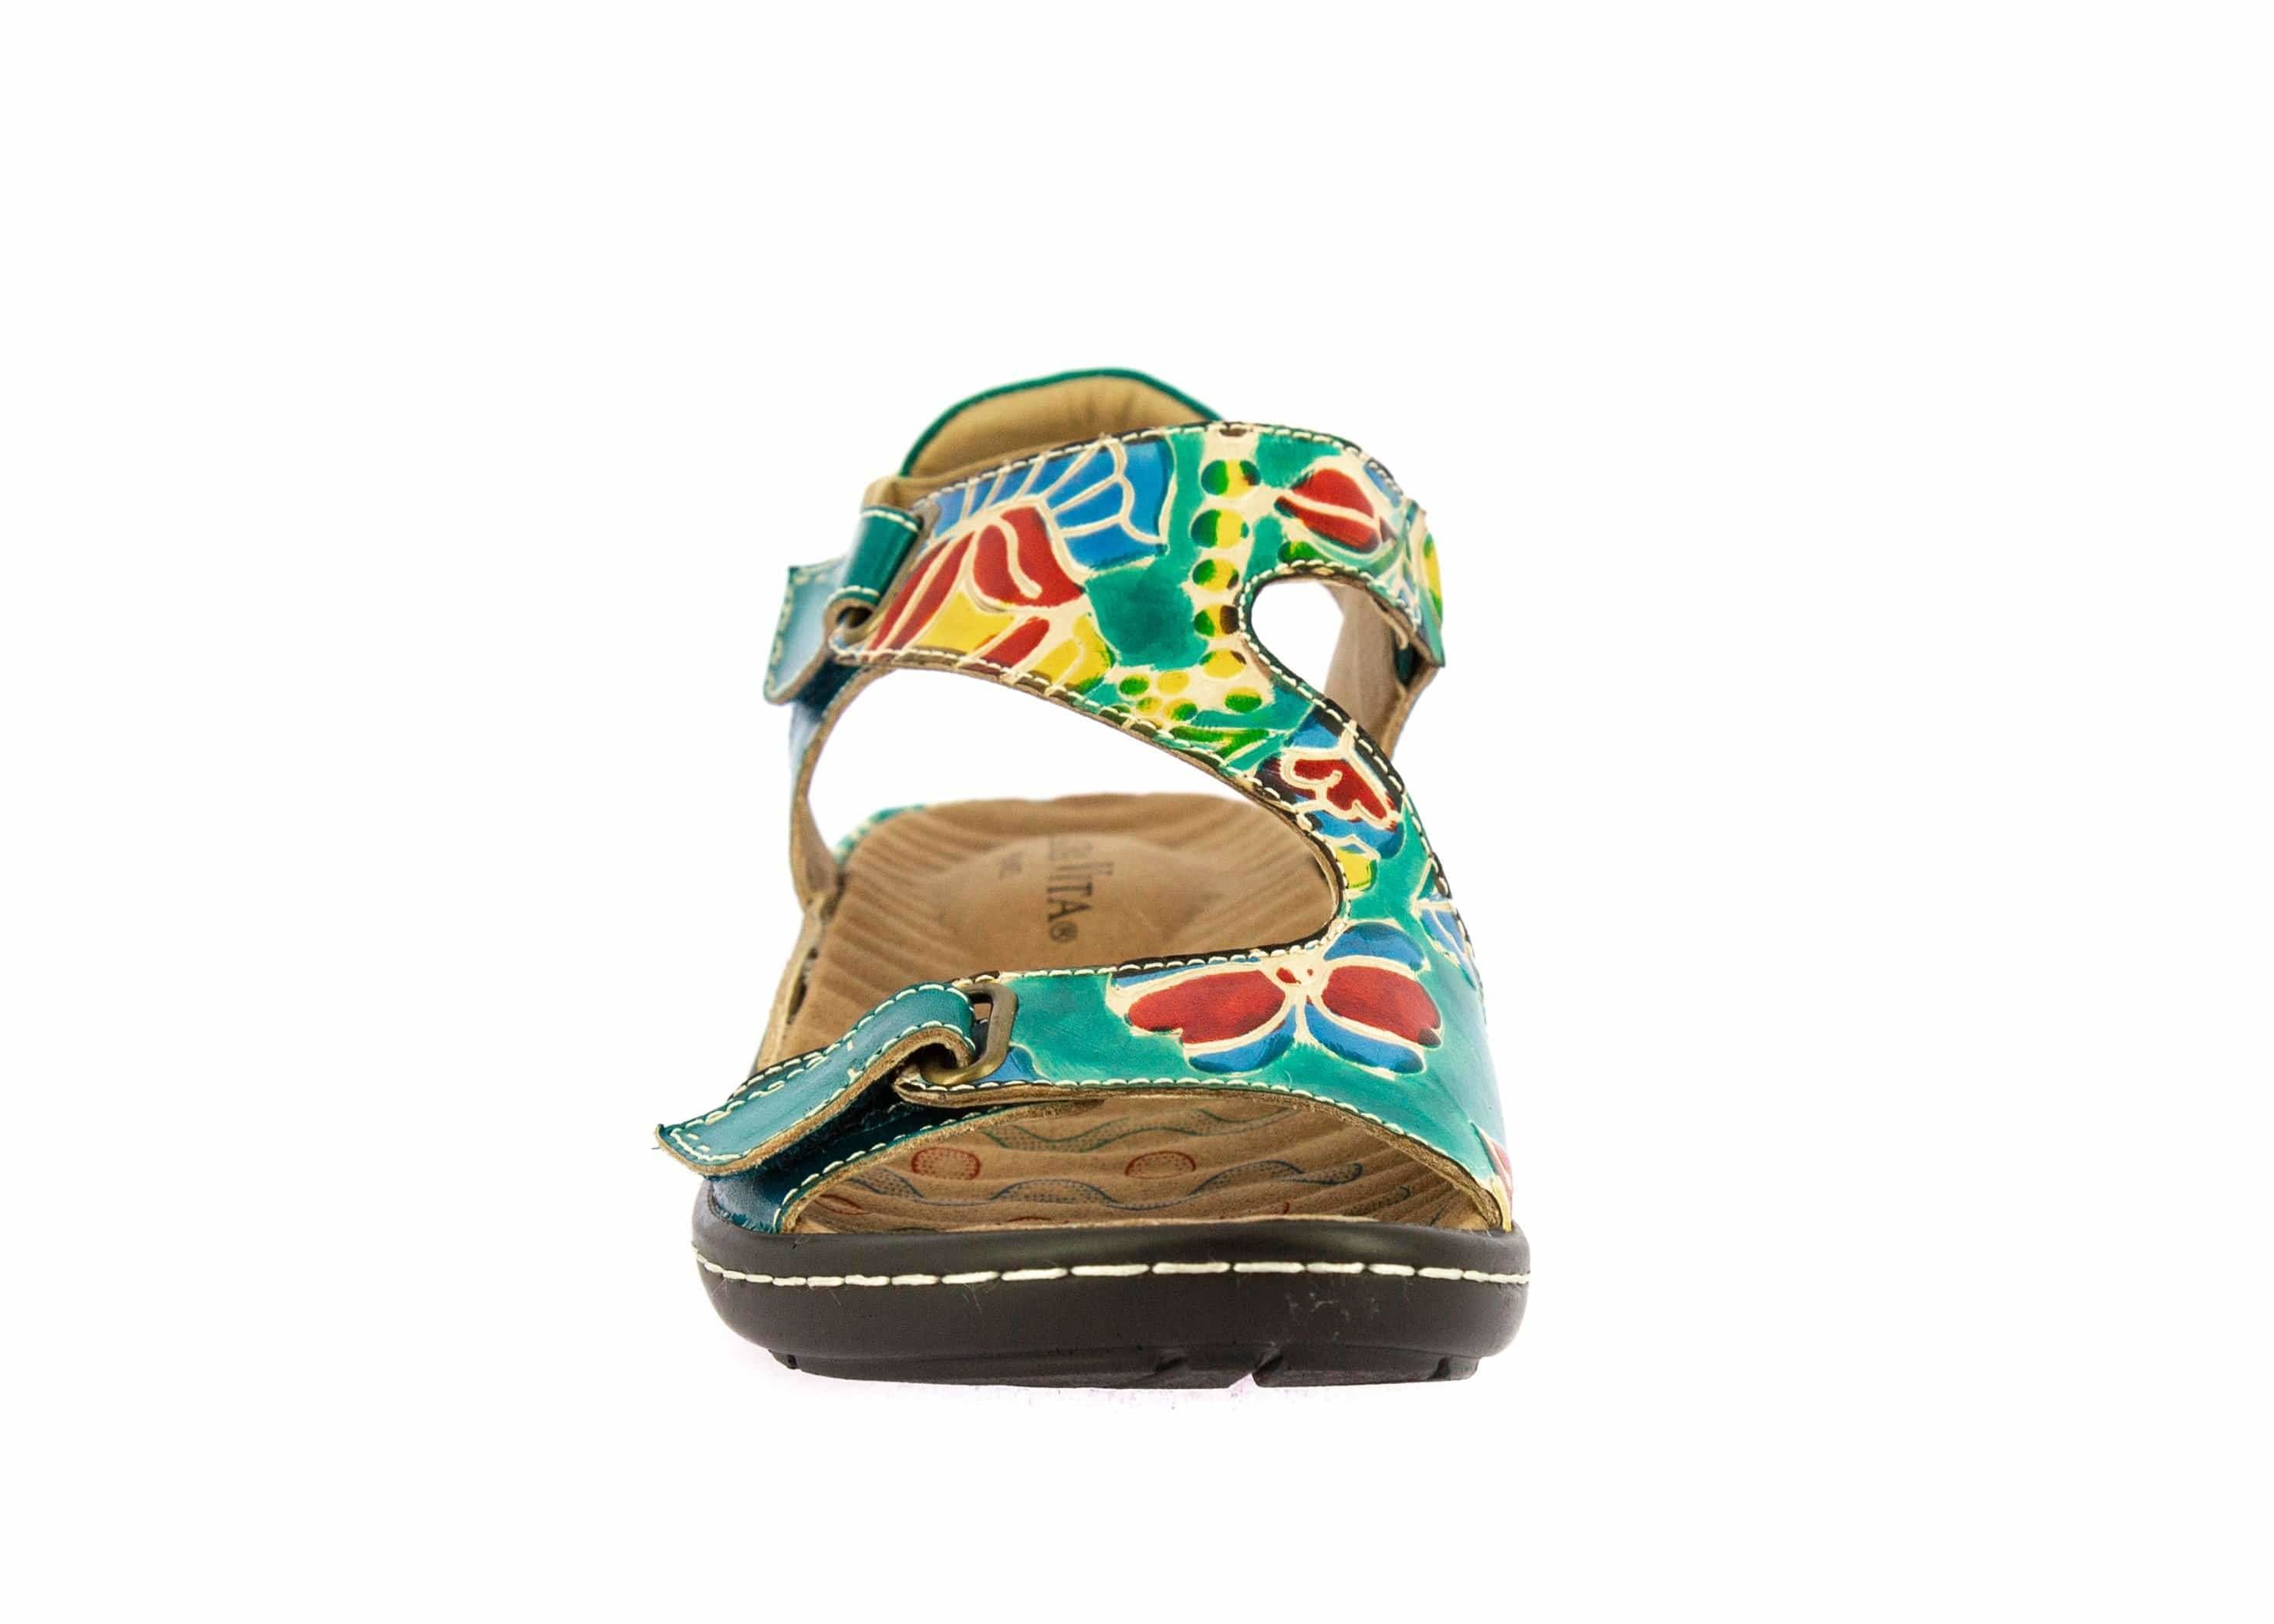 Schuh DOCCTEURO14 - Sandale